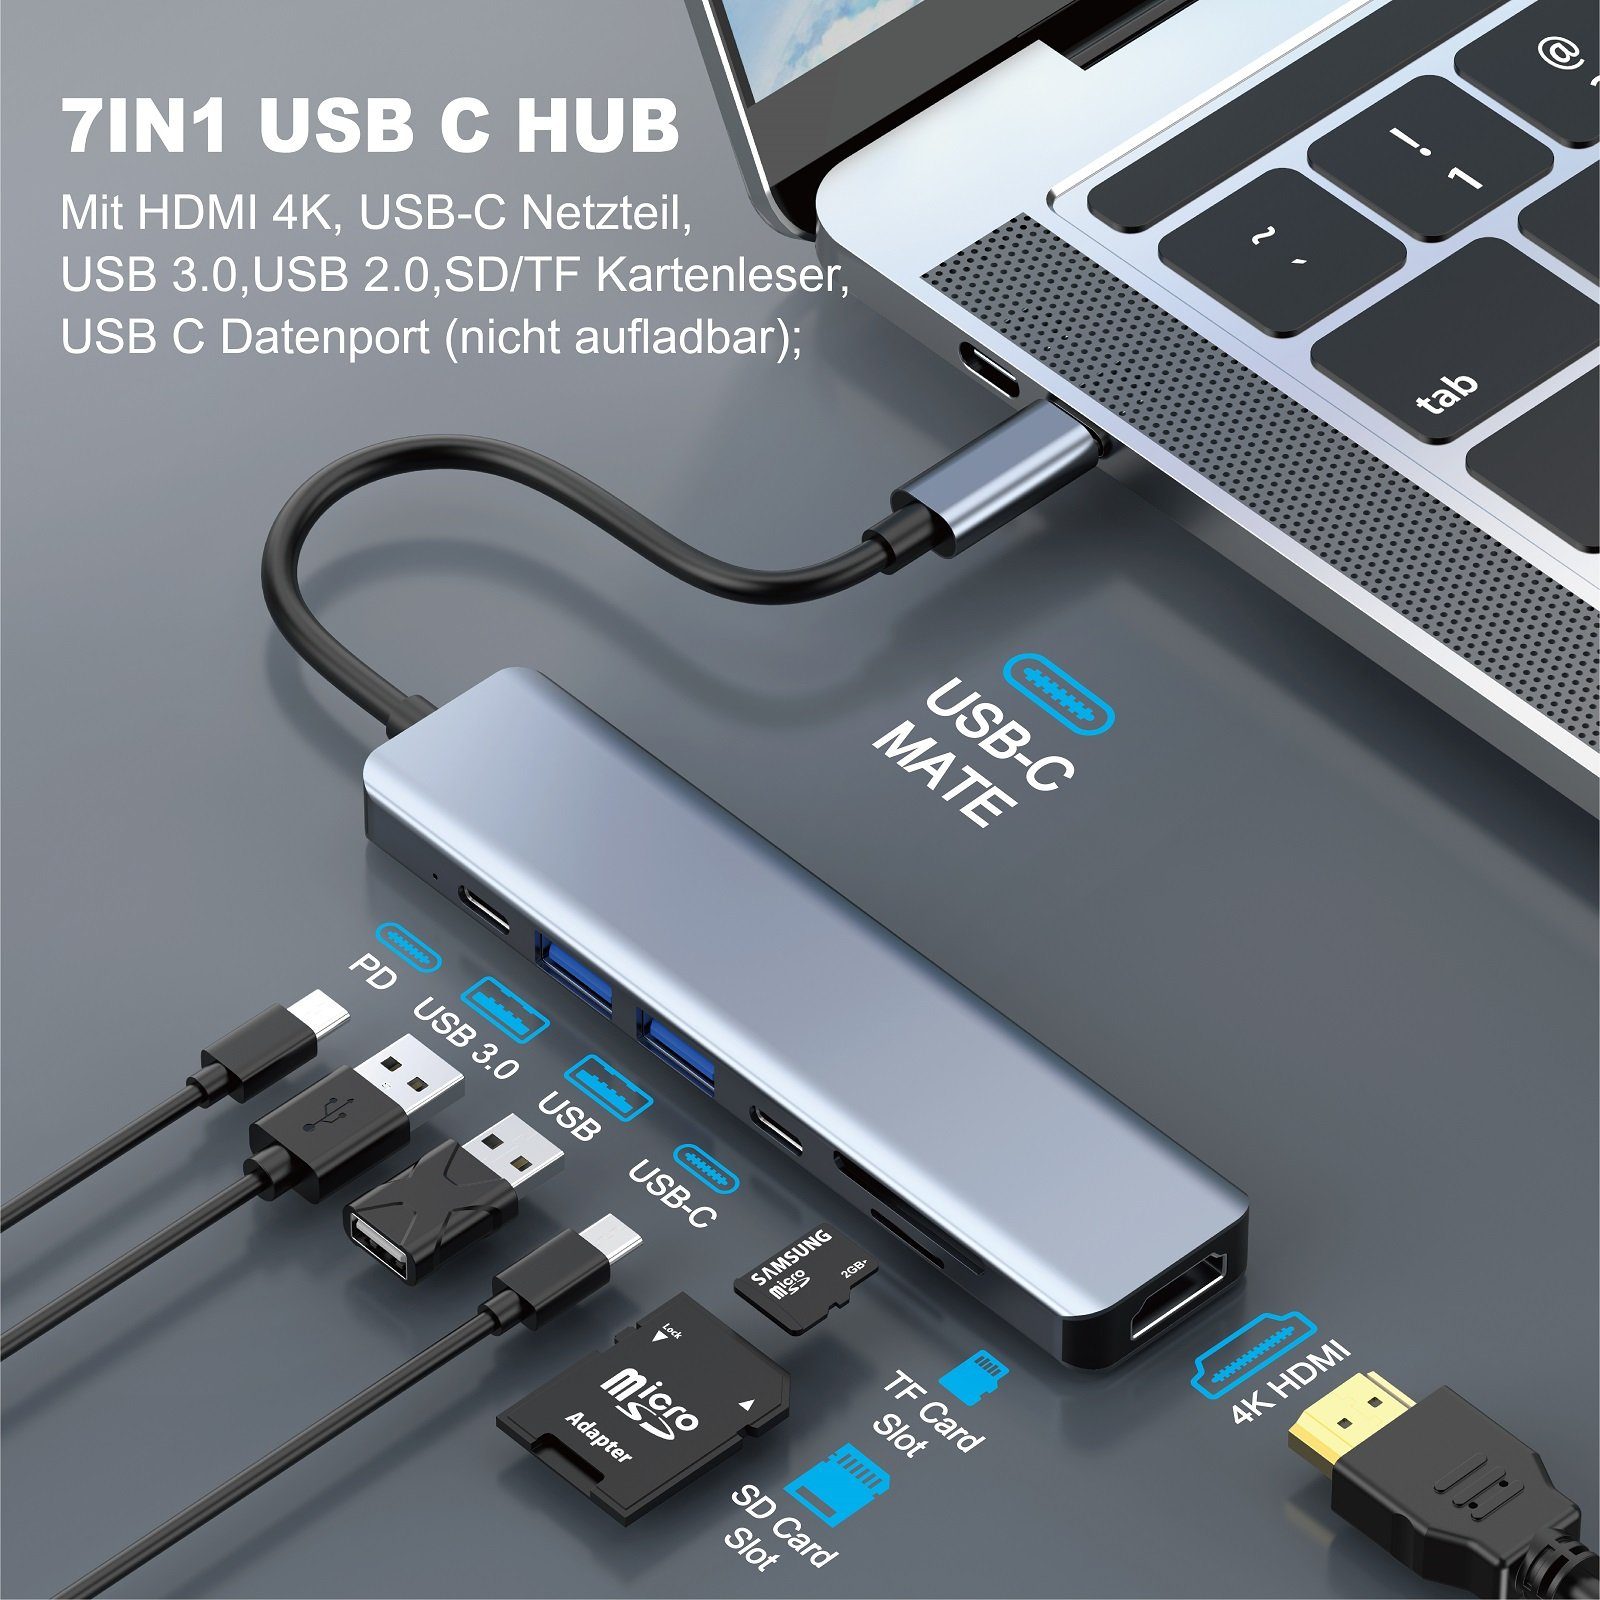 neue dawn »7 in 1 USB C Hub Adapter für iMac 2021 mit 4K HDMI« USB-Adapter,  Für MacBook Pro/Air 2020/2019, ThinkPad X1 Carbon Asus Deluxe 3/3 pro